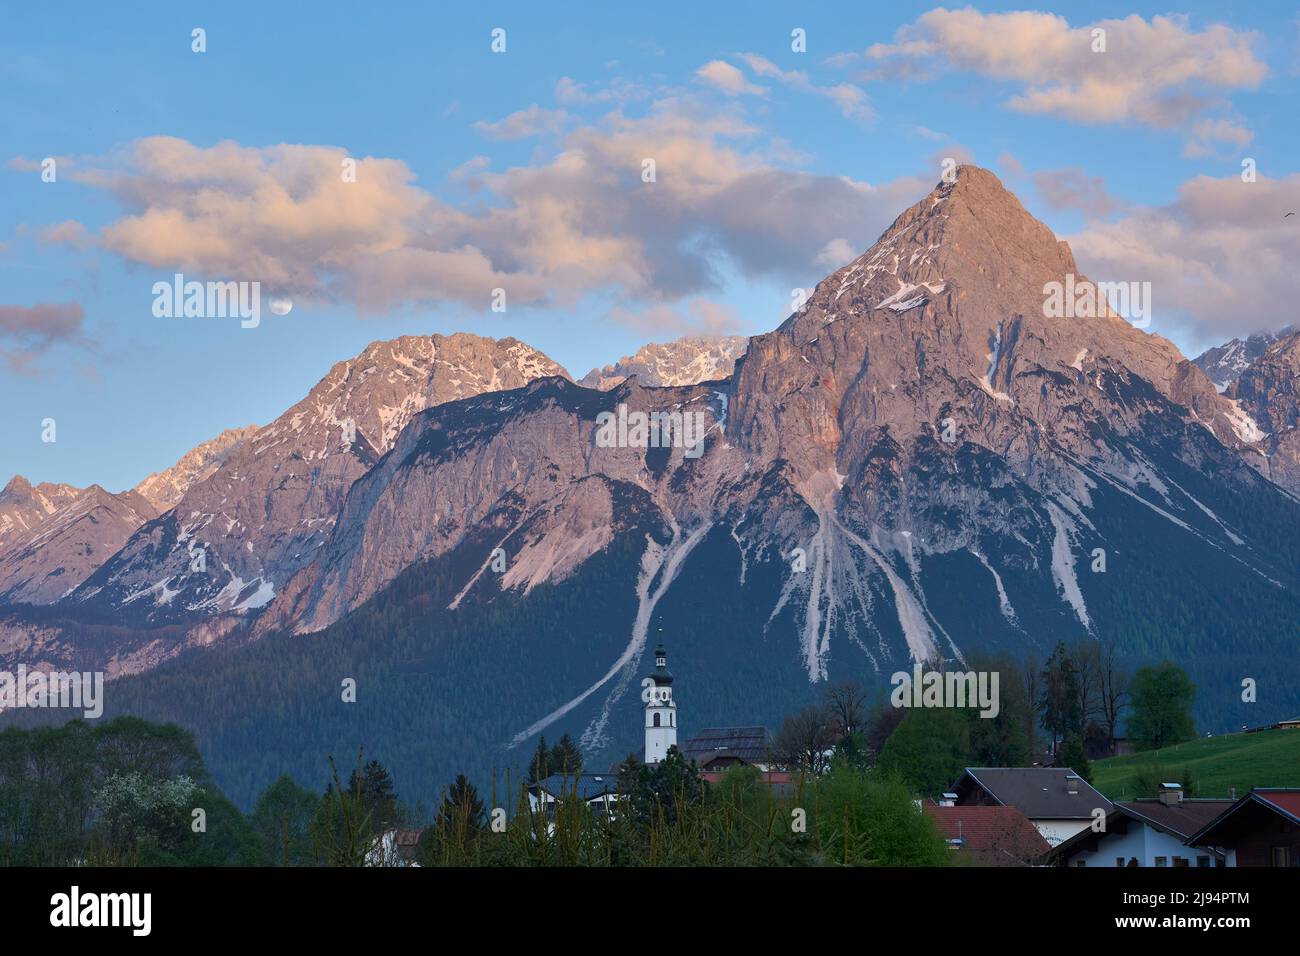 Full moon rises over the steep summits of Wetterstein mountain range high above Ehrwald in Tirol Austria, Landscape Stock Photo